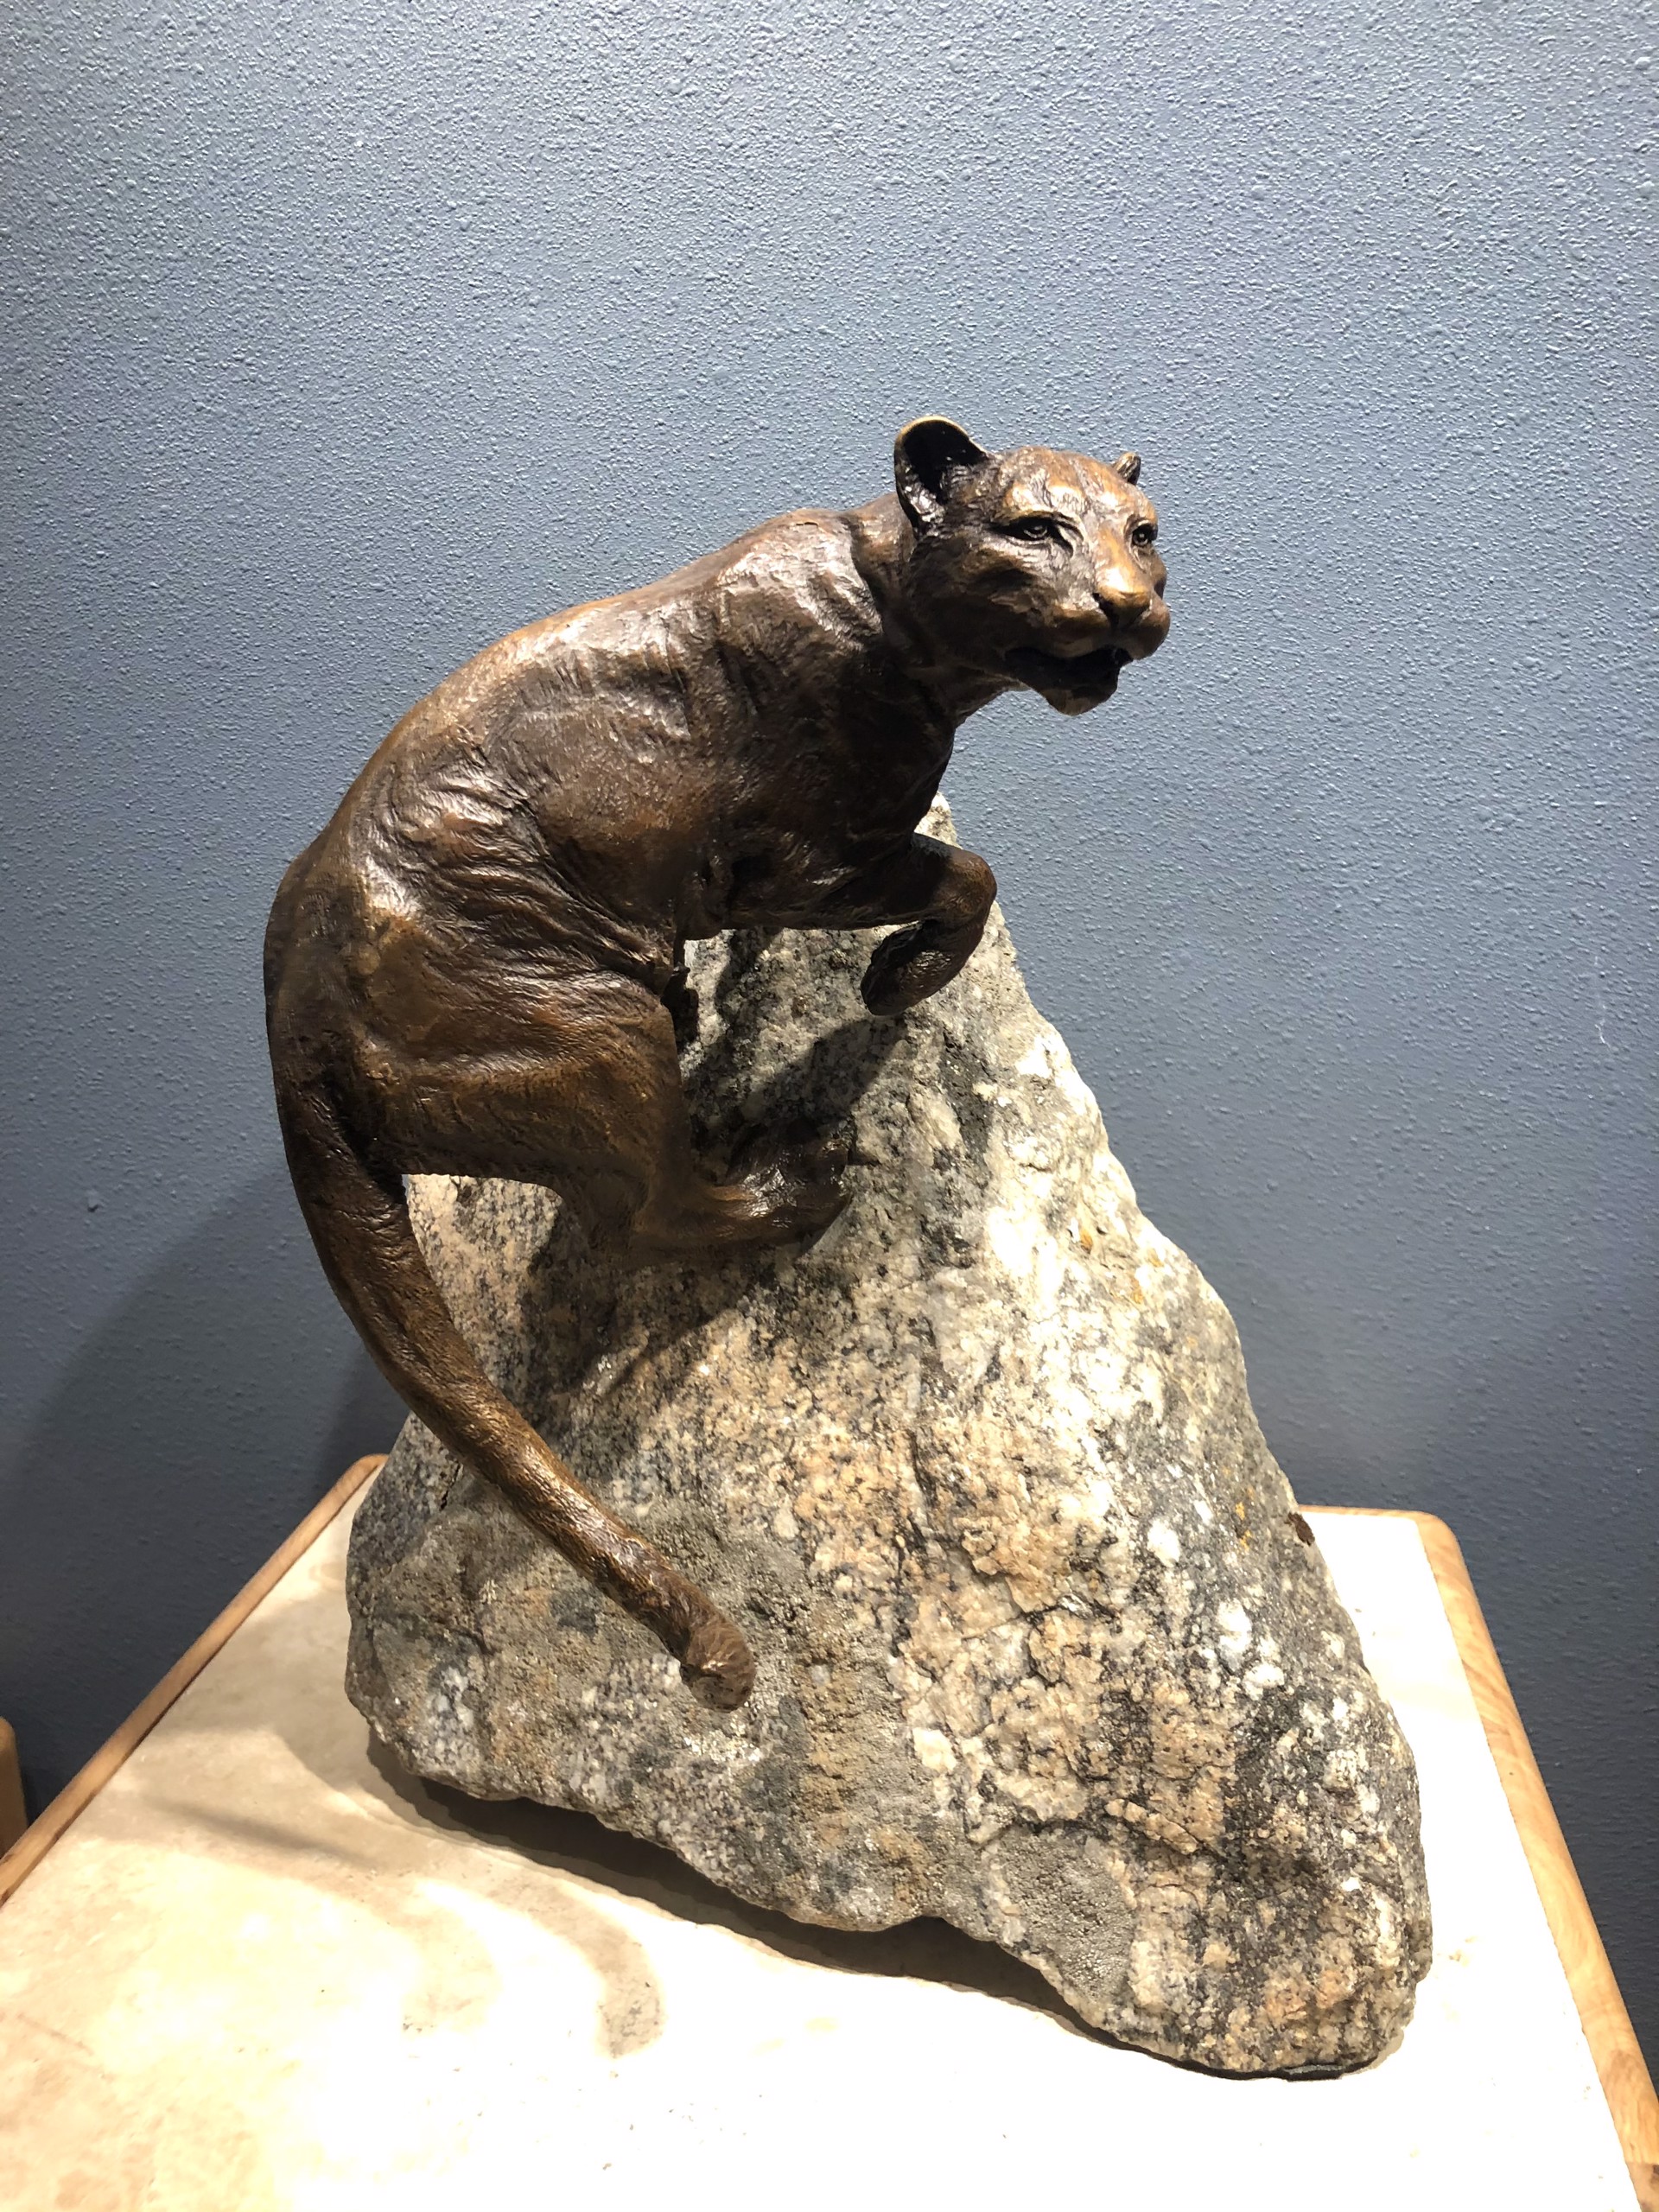 Rimrock Cougar by Tim Whitworth